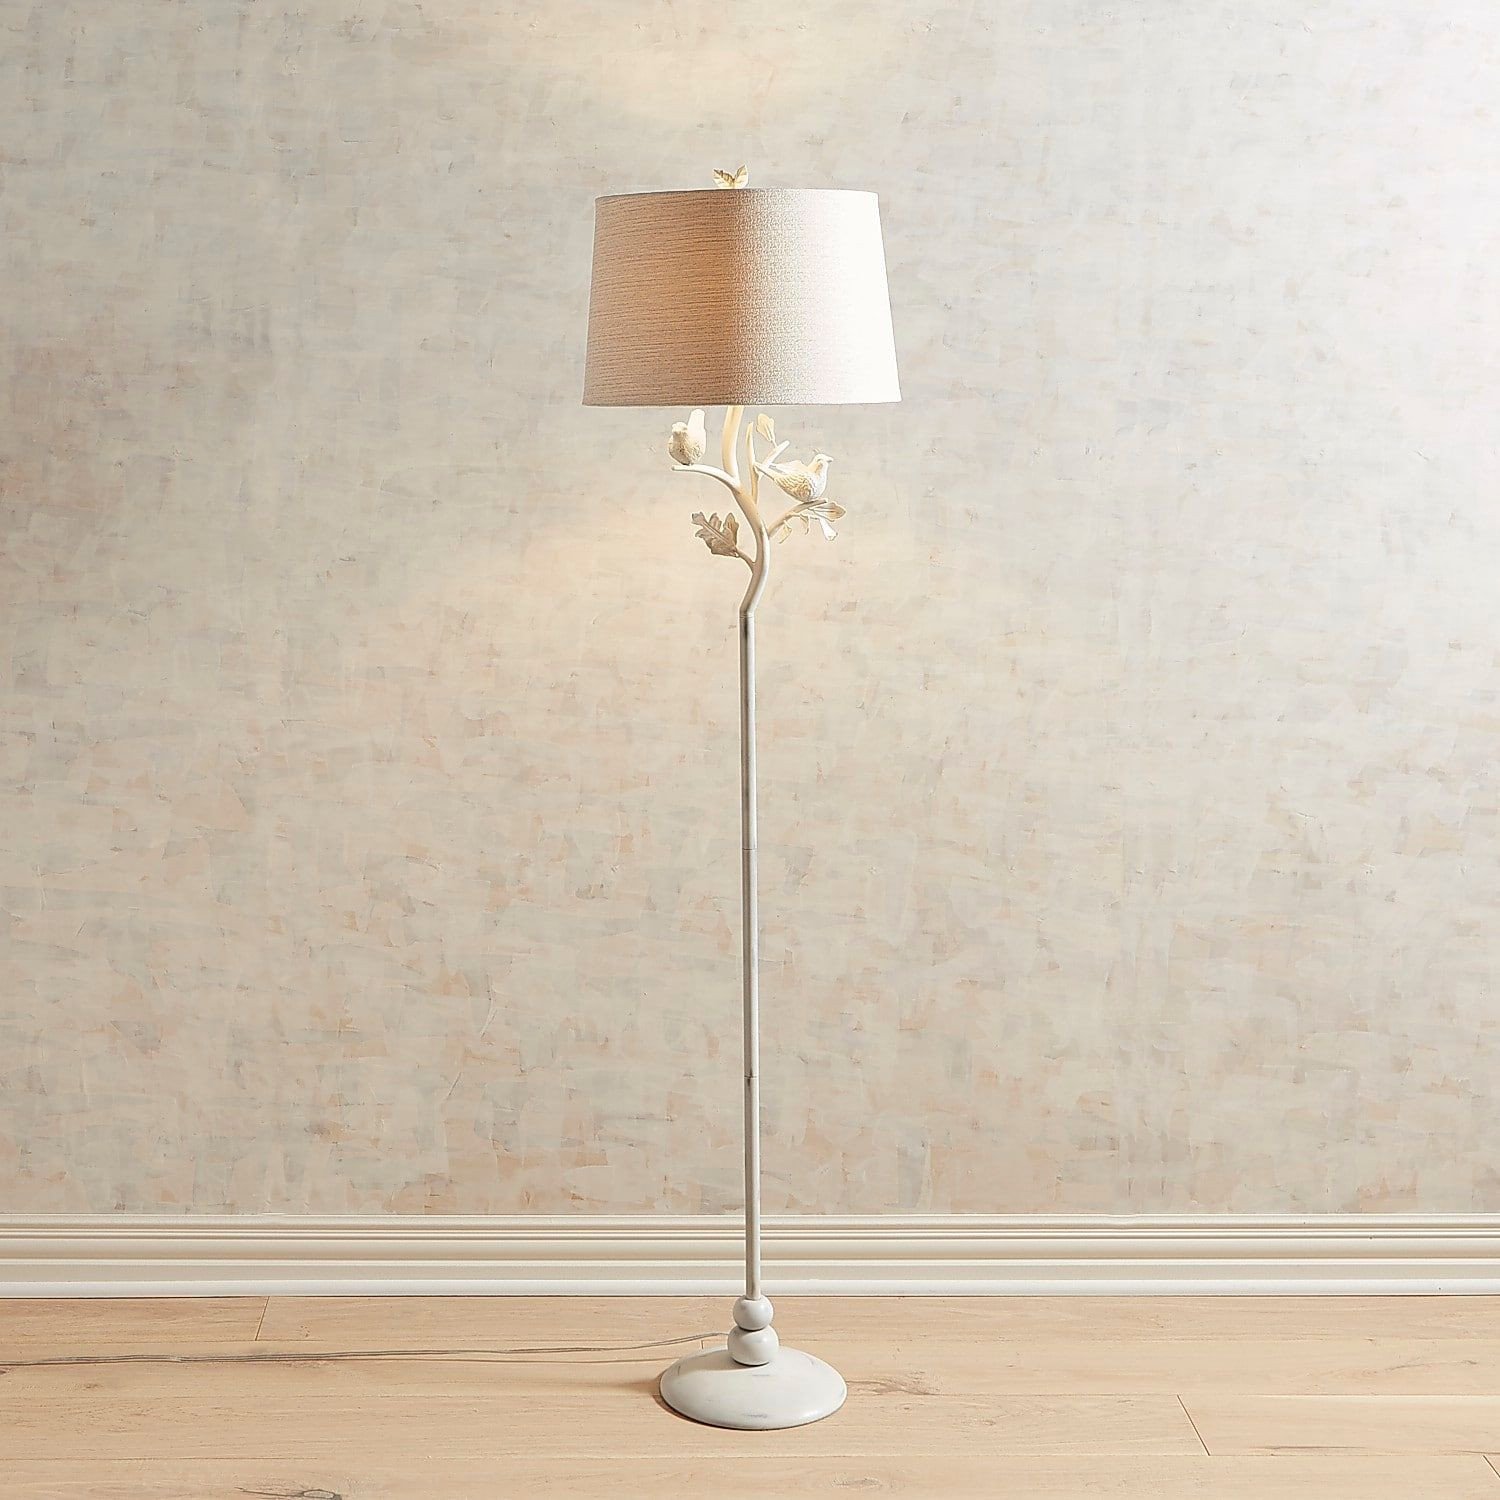 Floor Lamps for Bedroom New Whitewashed Antiqued Bird Floor Lamp